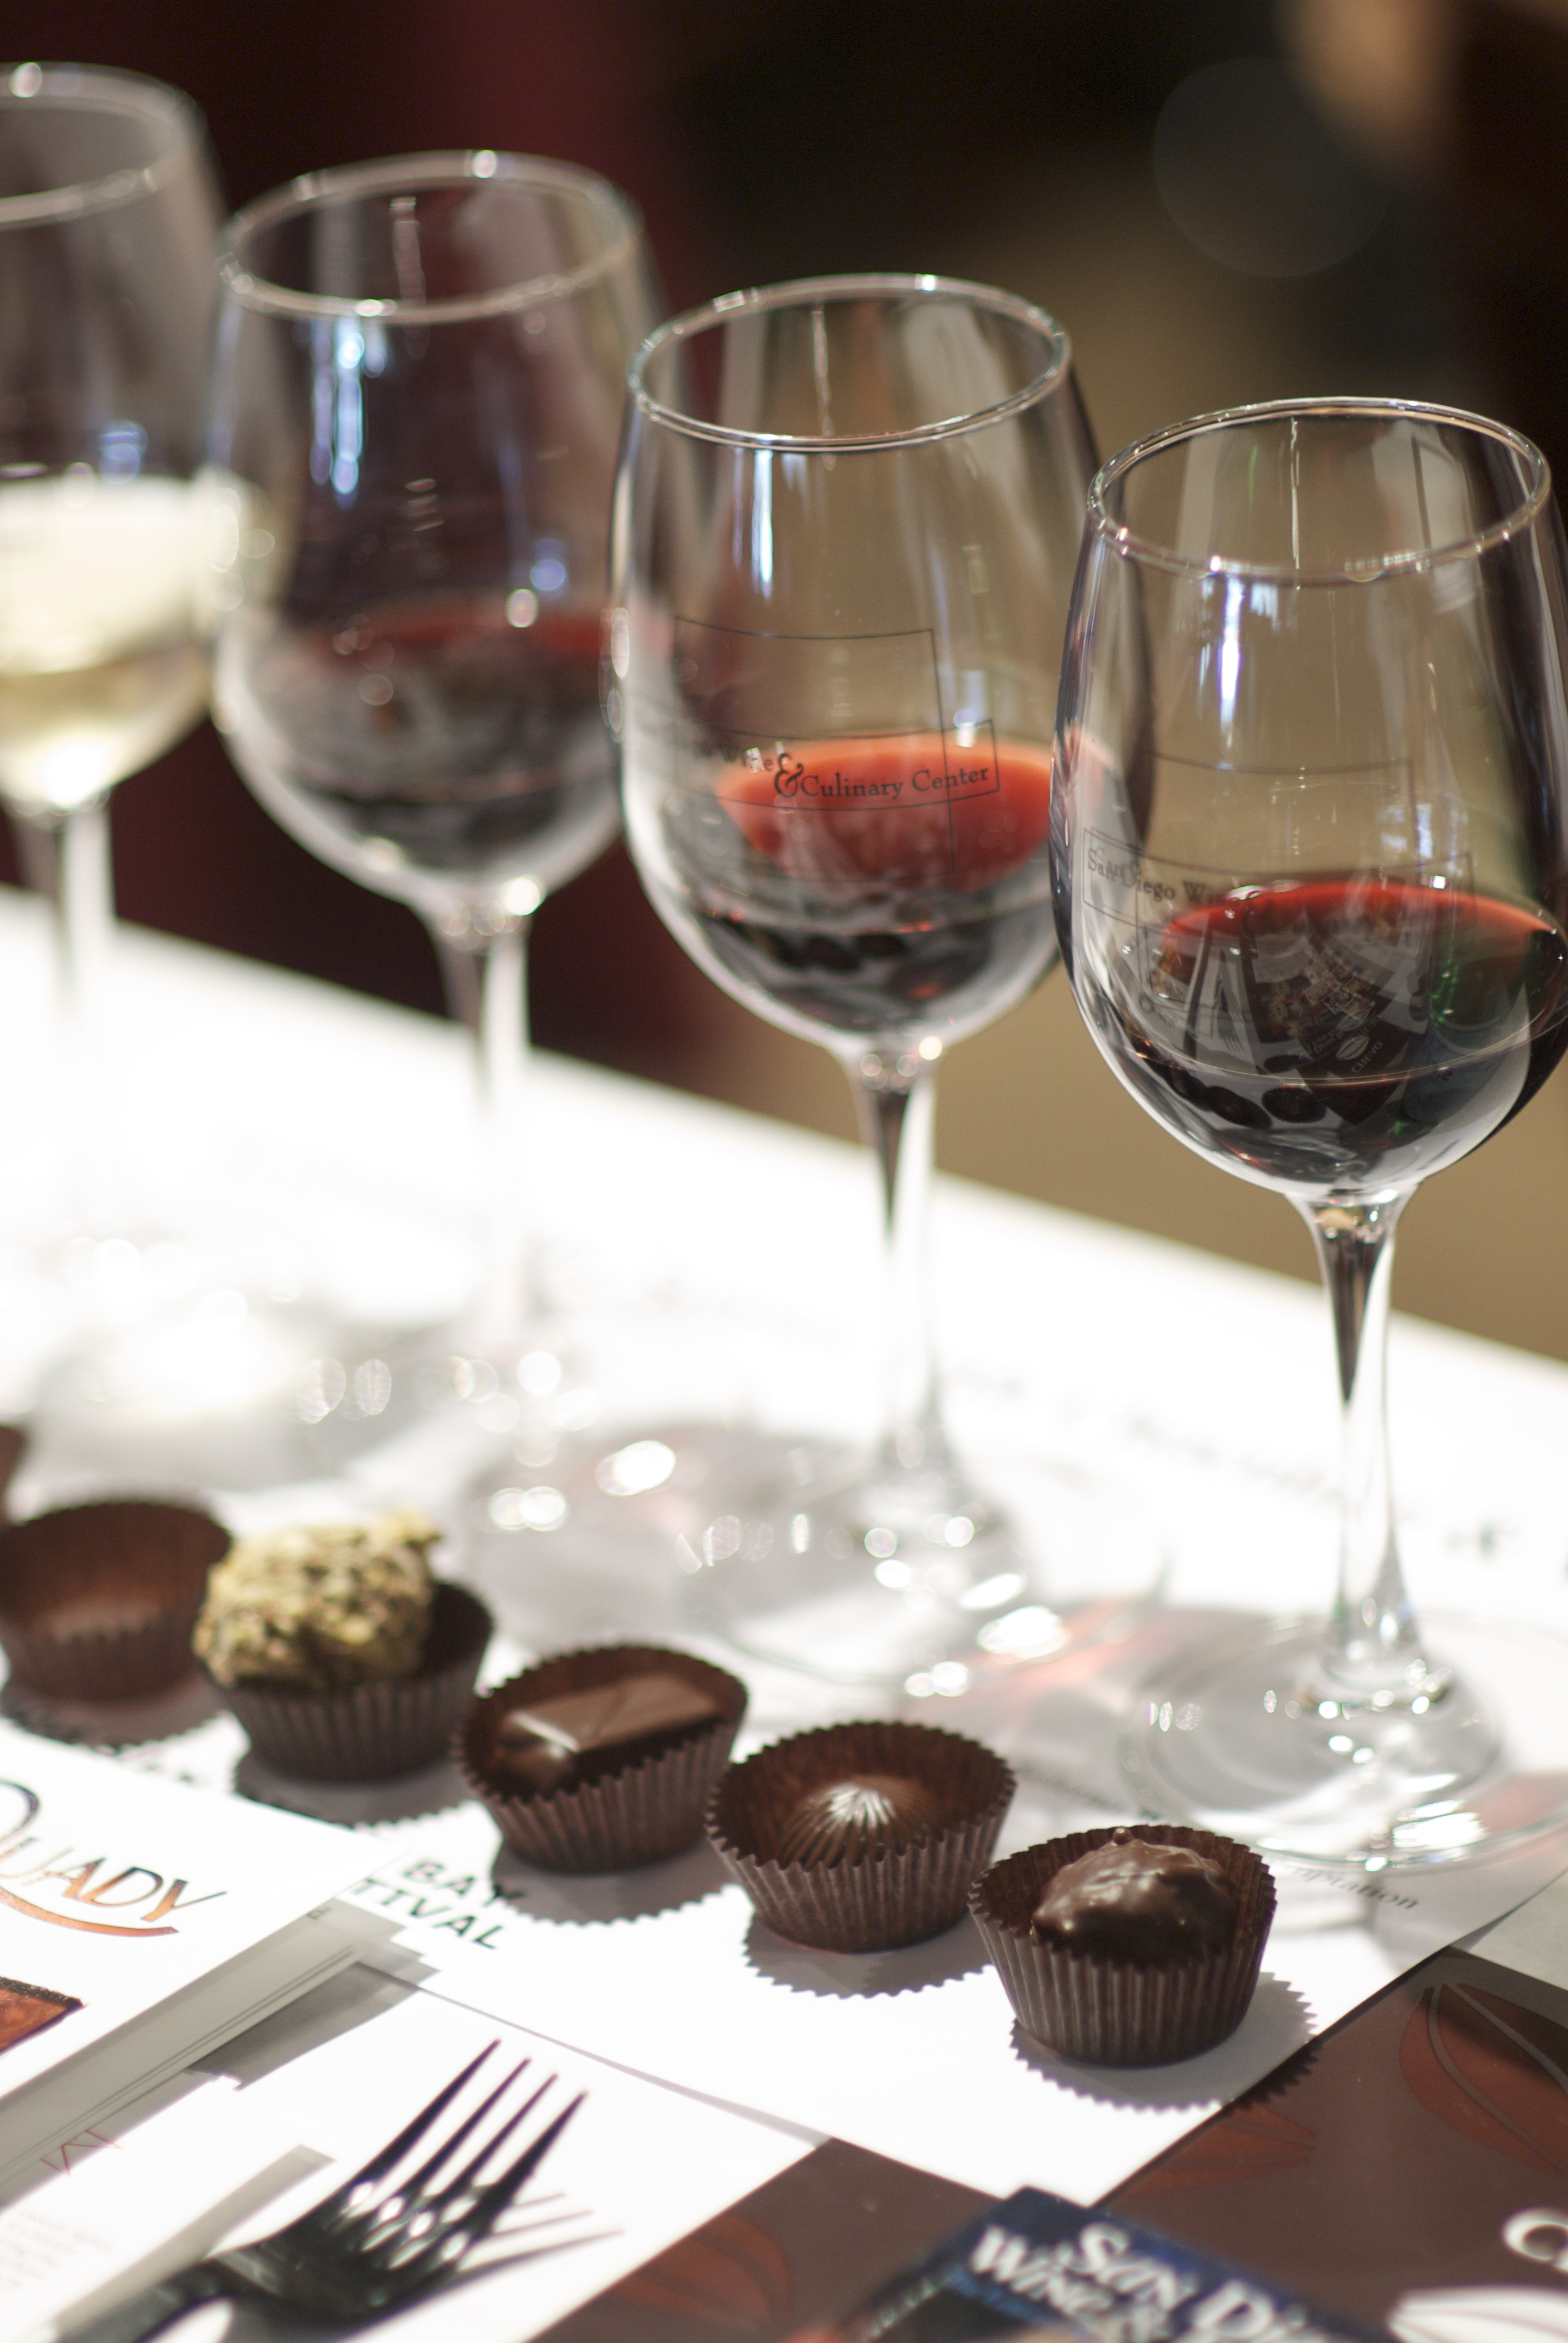 File:Red wine and chocolate pairing.jpg - Wikimedia Commons